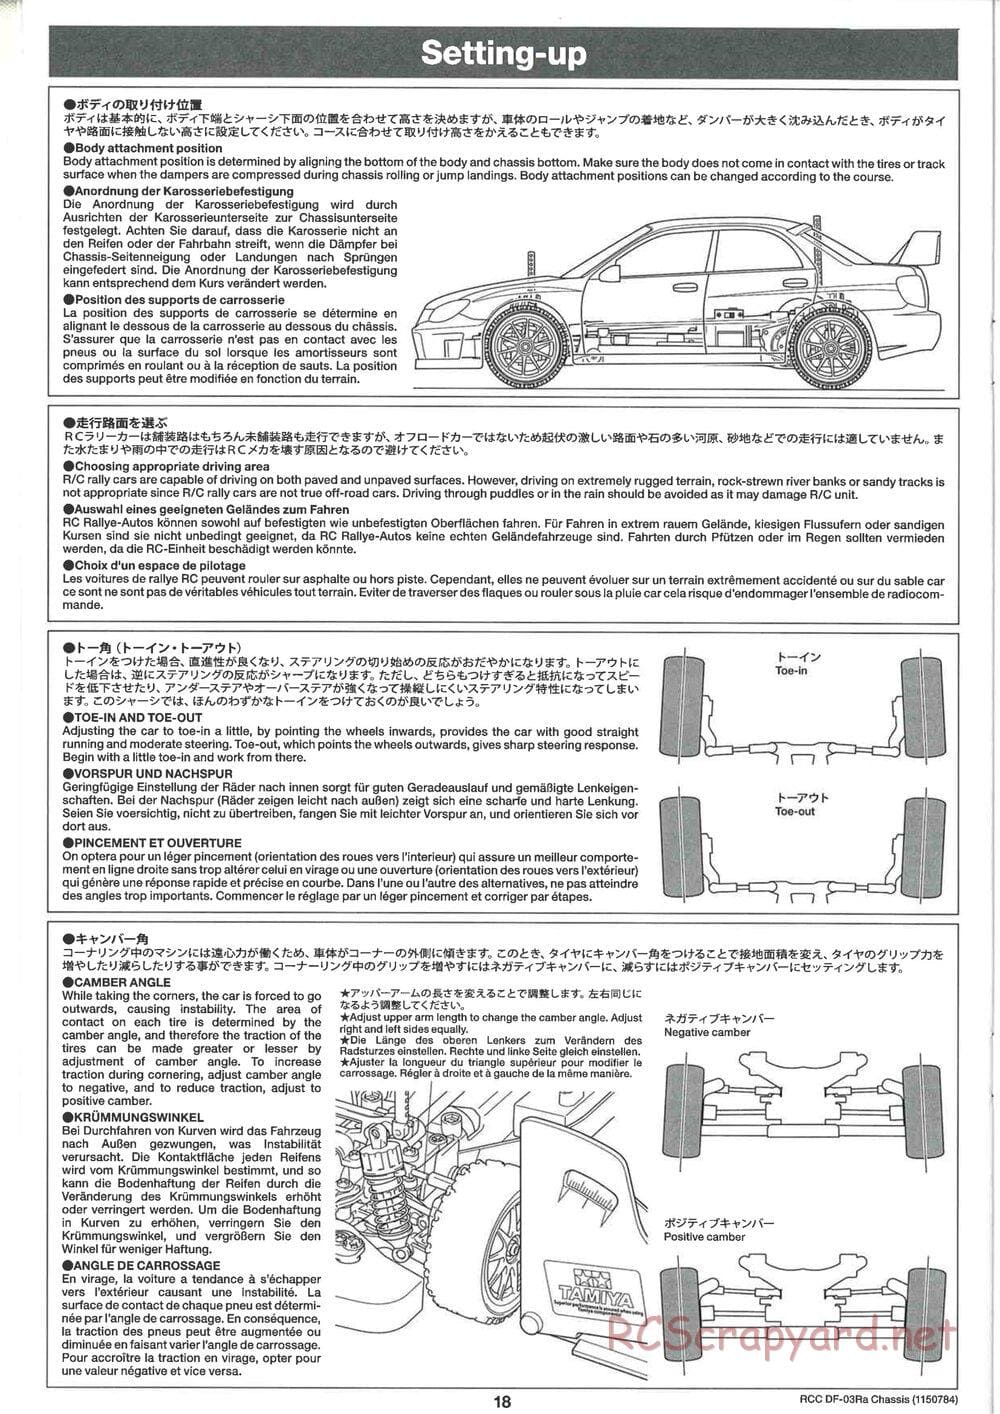 Tamiya - DF-03Ra Chassis - Manual - Page 18